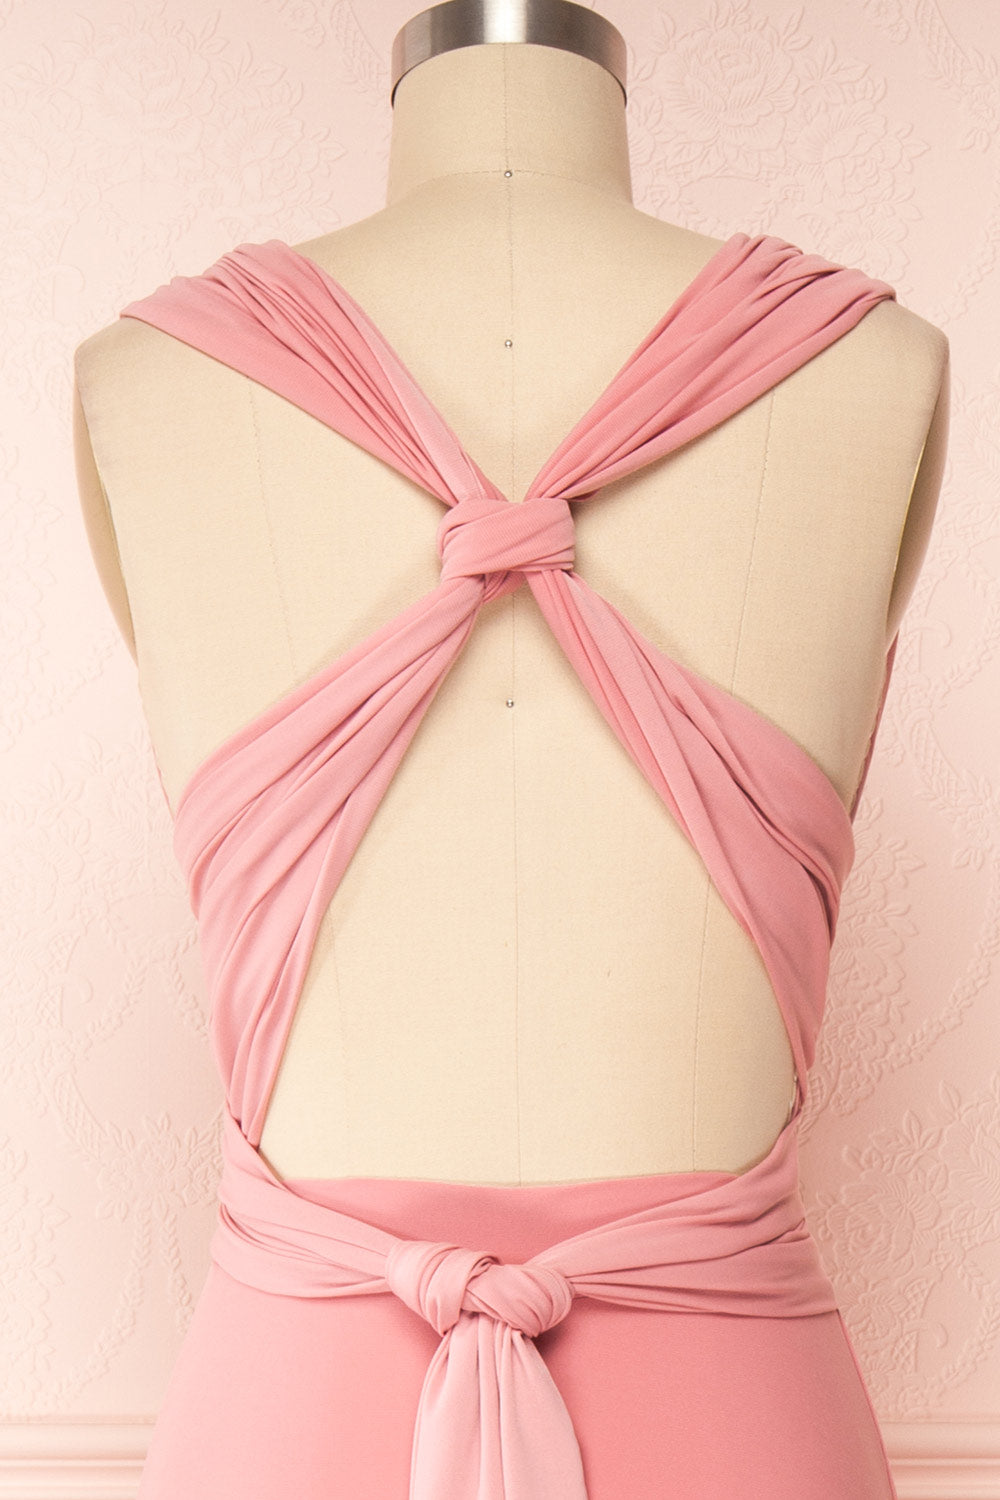 Violaine Dusty Pink Convertible Maxi Dress | Boutique 1861 cross